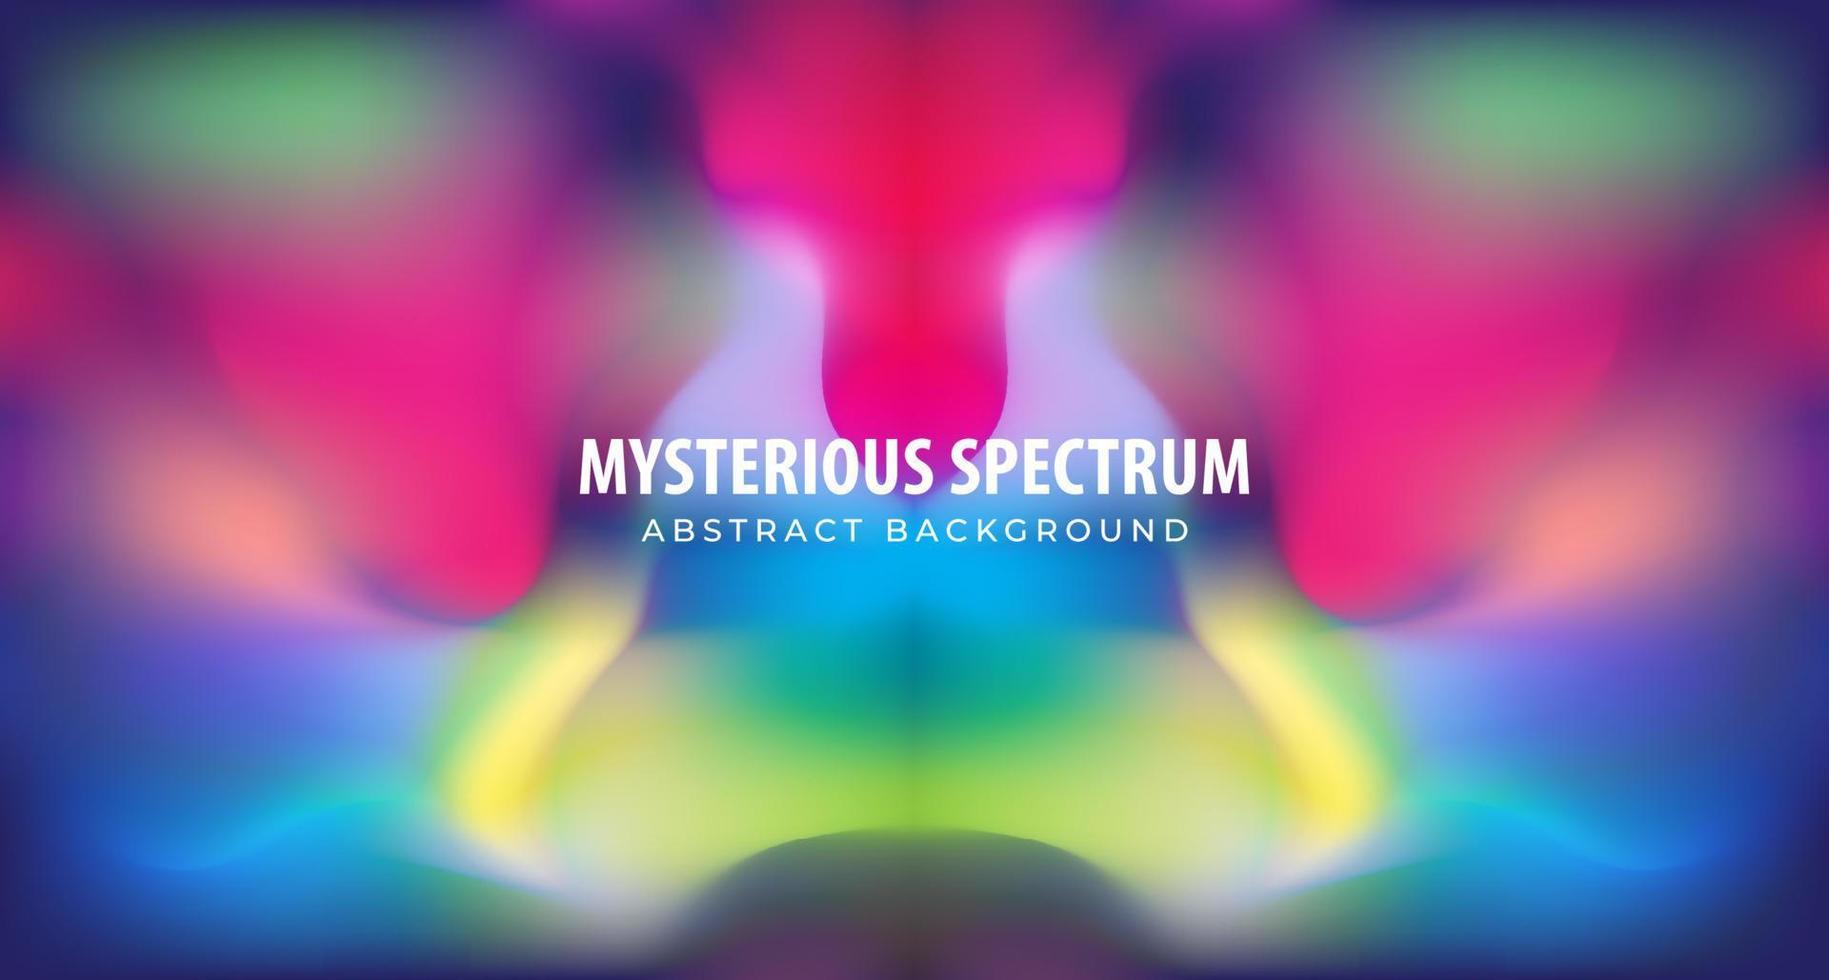 Mysterious Dark Spectrum vector illustration. Blurred multicolour gradient. Abstract background design for wallpaper, backdrop banner, poster, cover, flyer, presentation, advertising etc